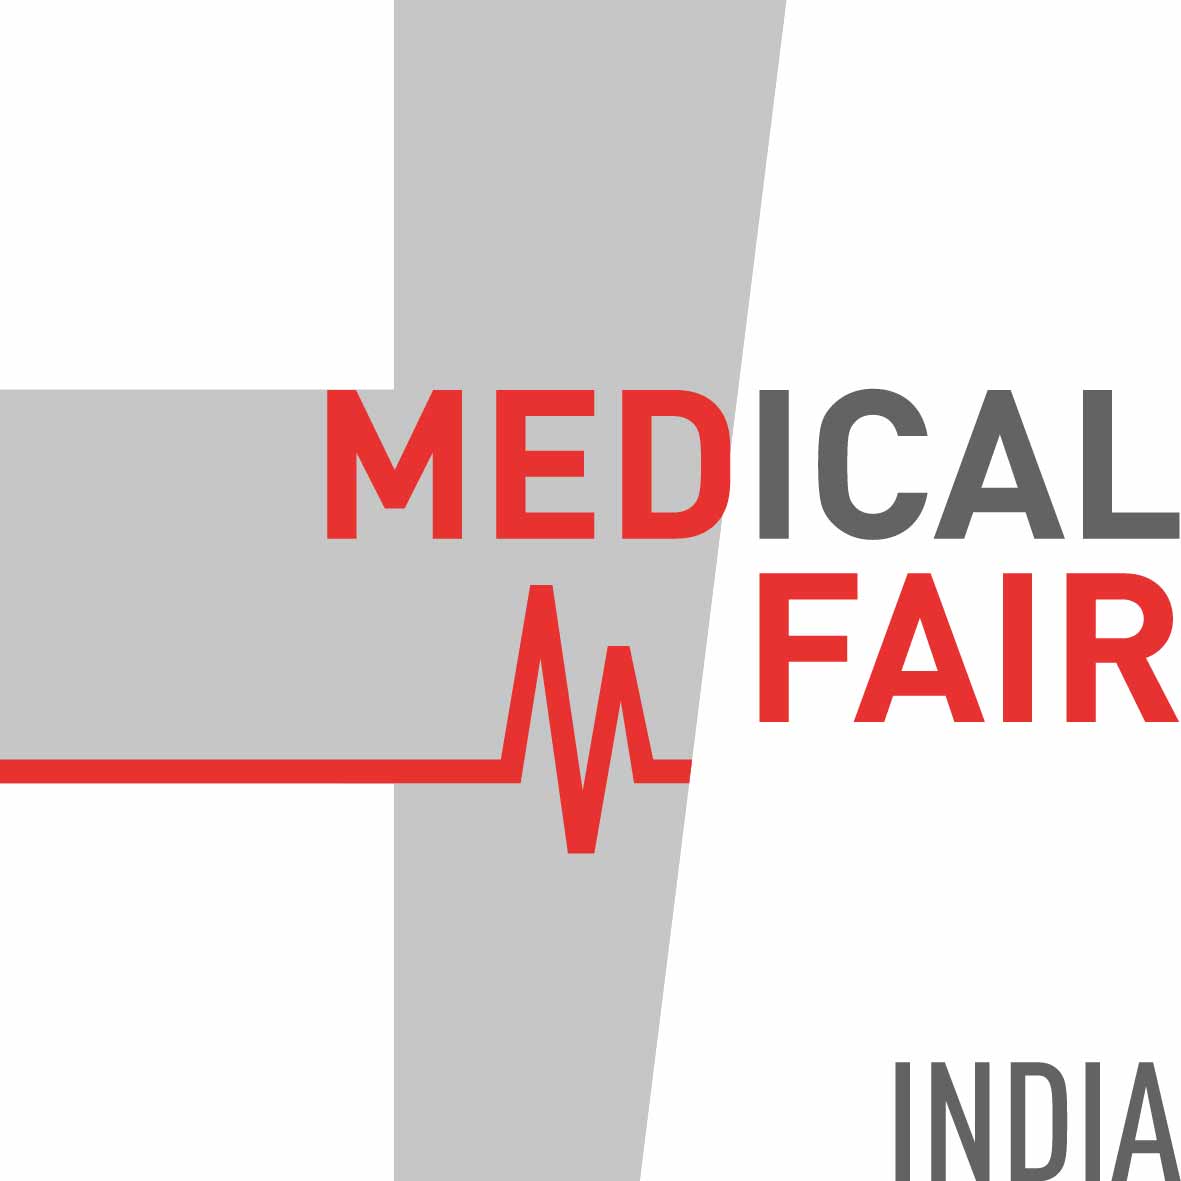 MEDICAL FAIR INDIA